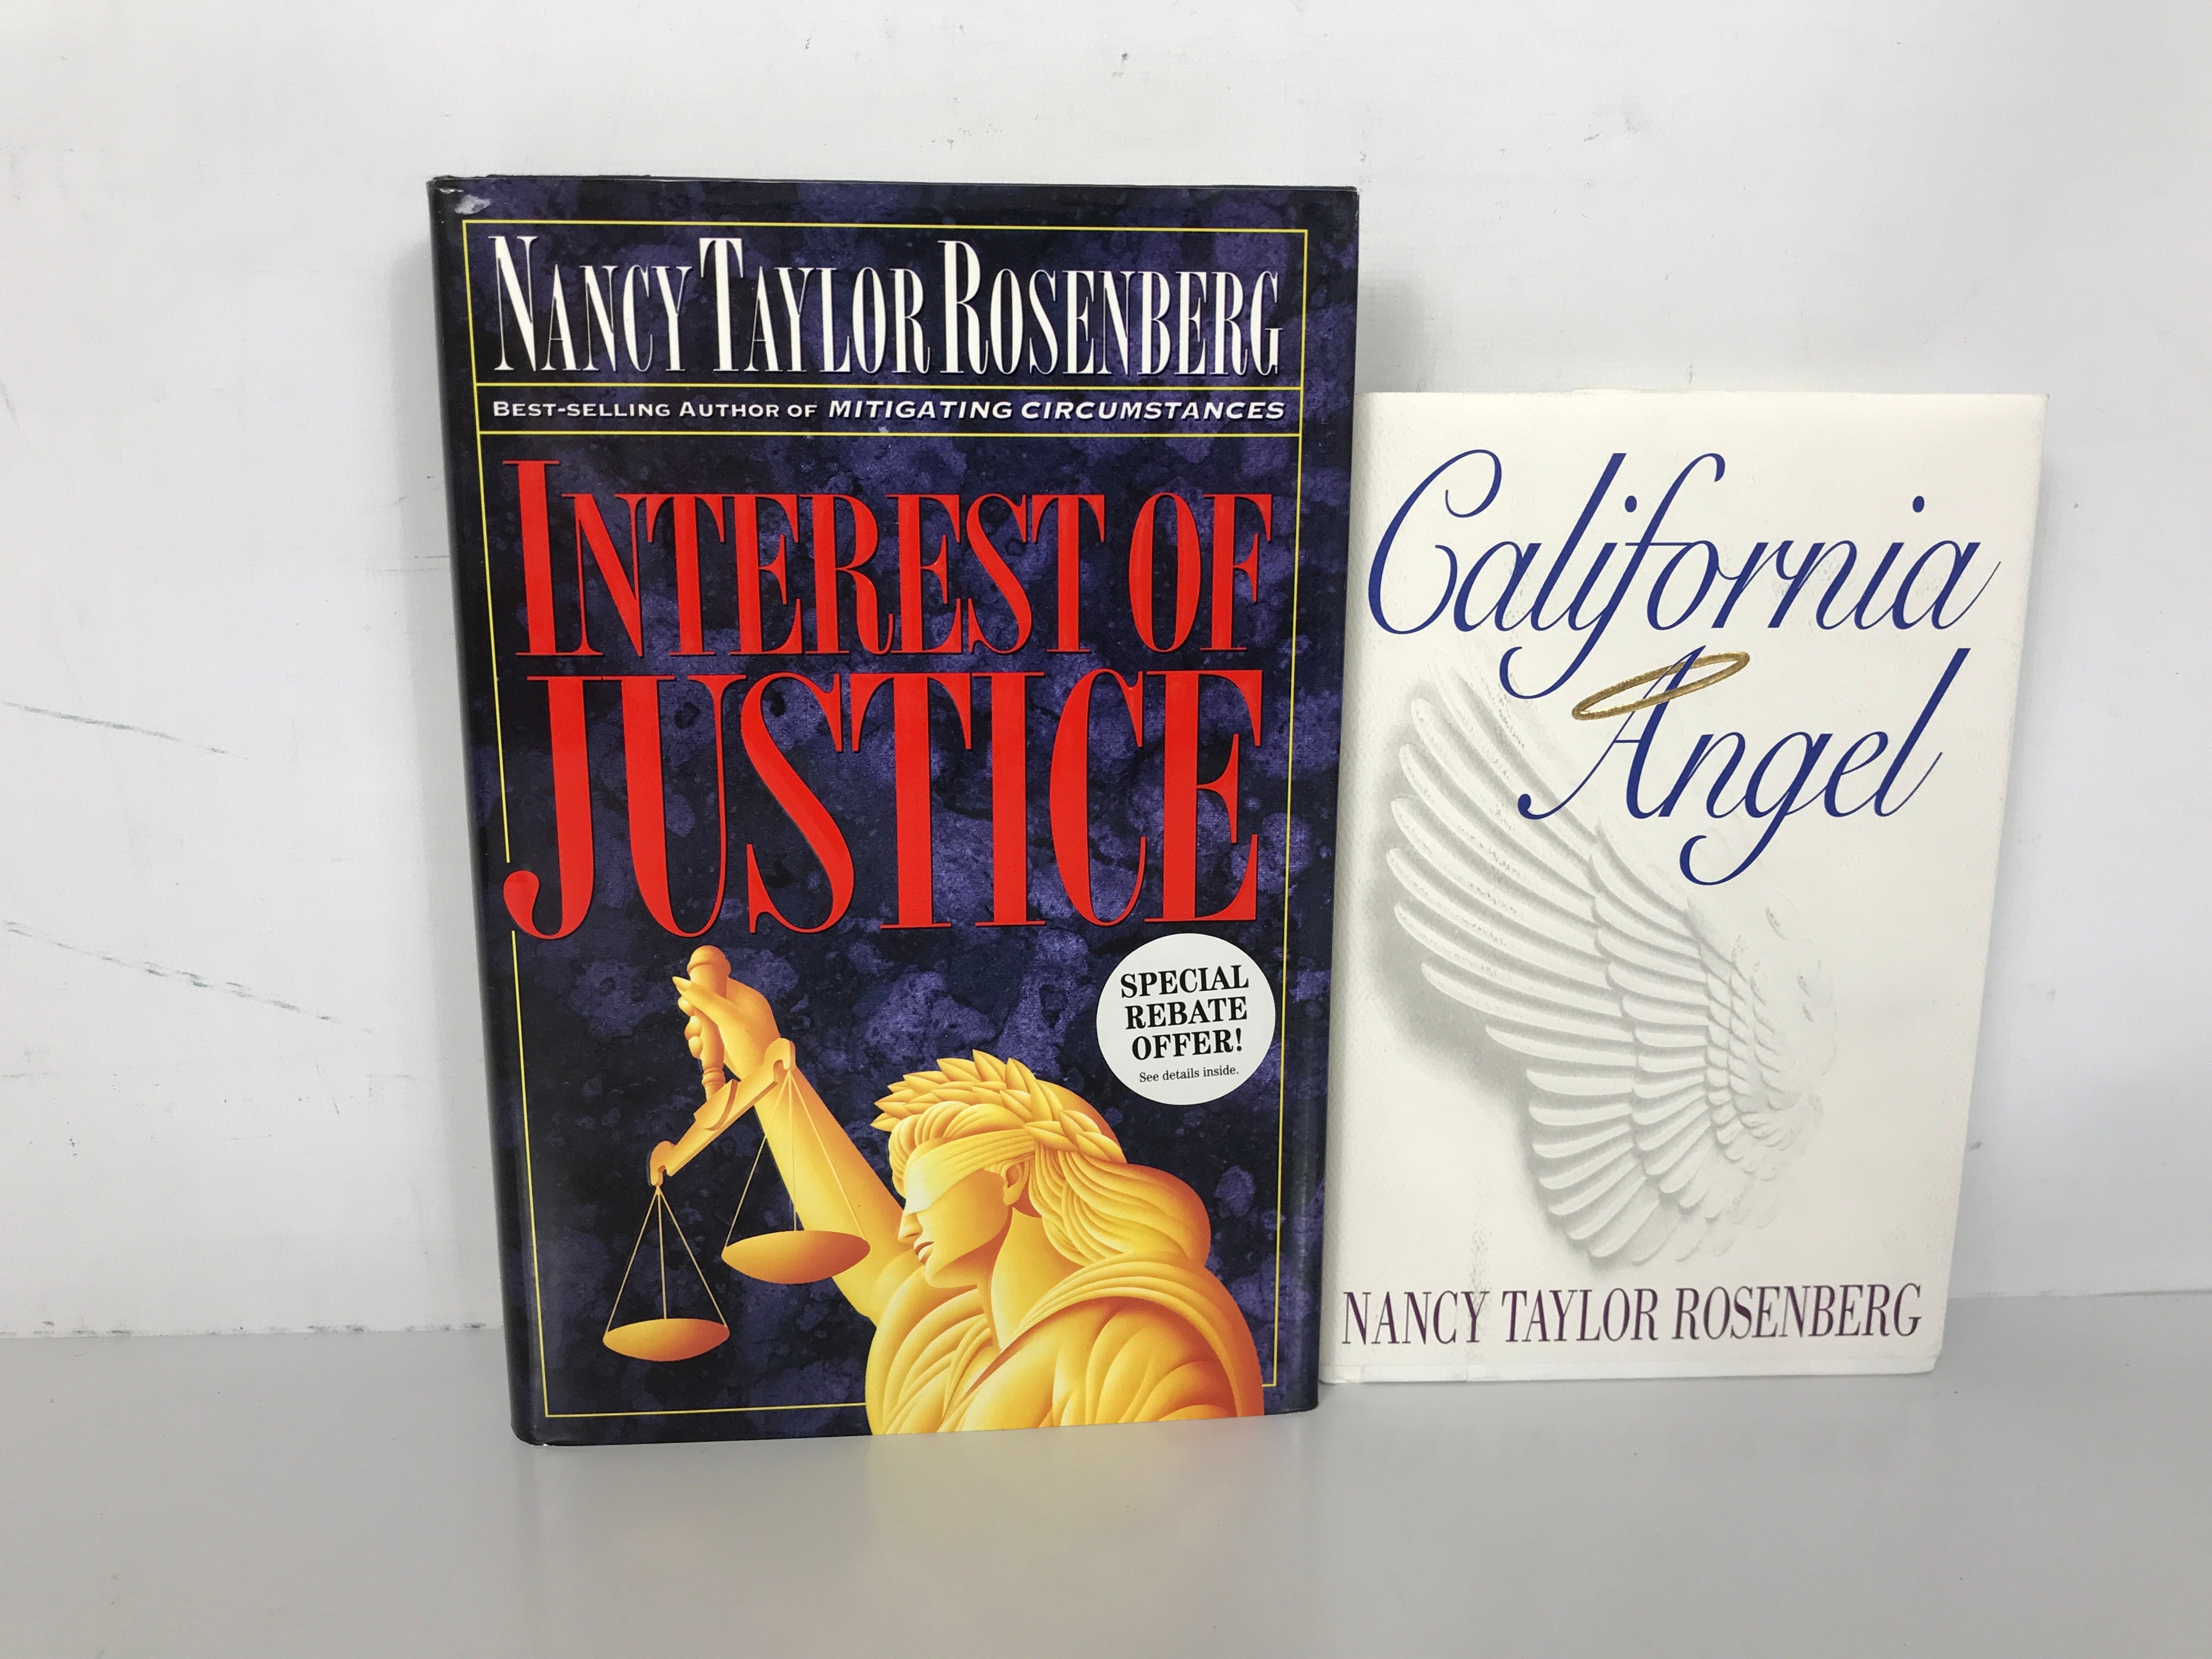 Lot of 2 Signed First Edition Nancy Taylor Rosenberg Novels:1993-1995 HC DJ